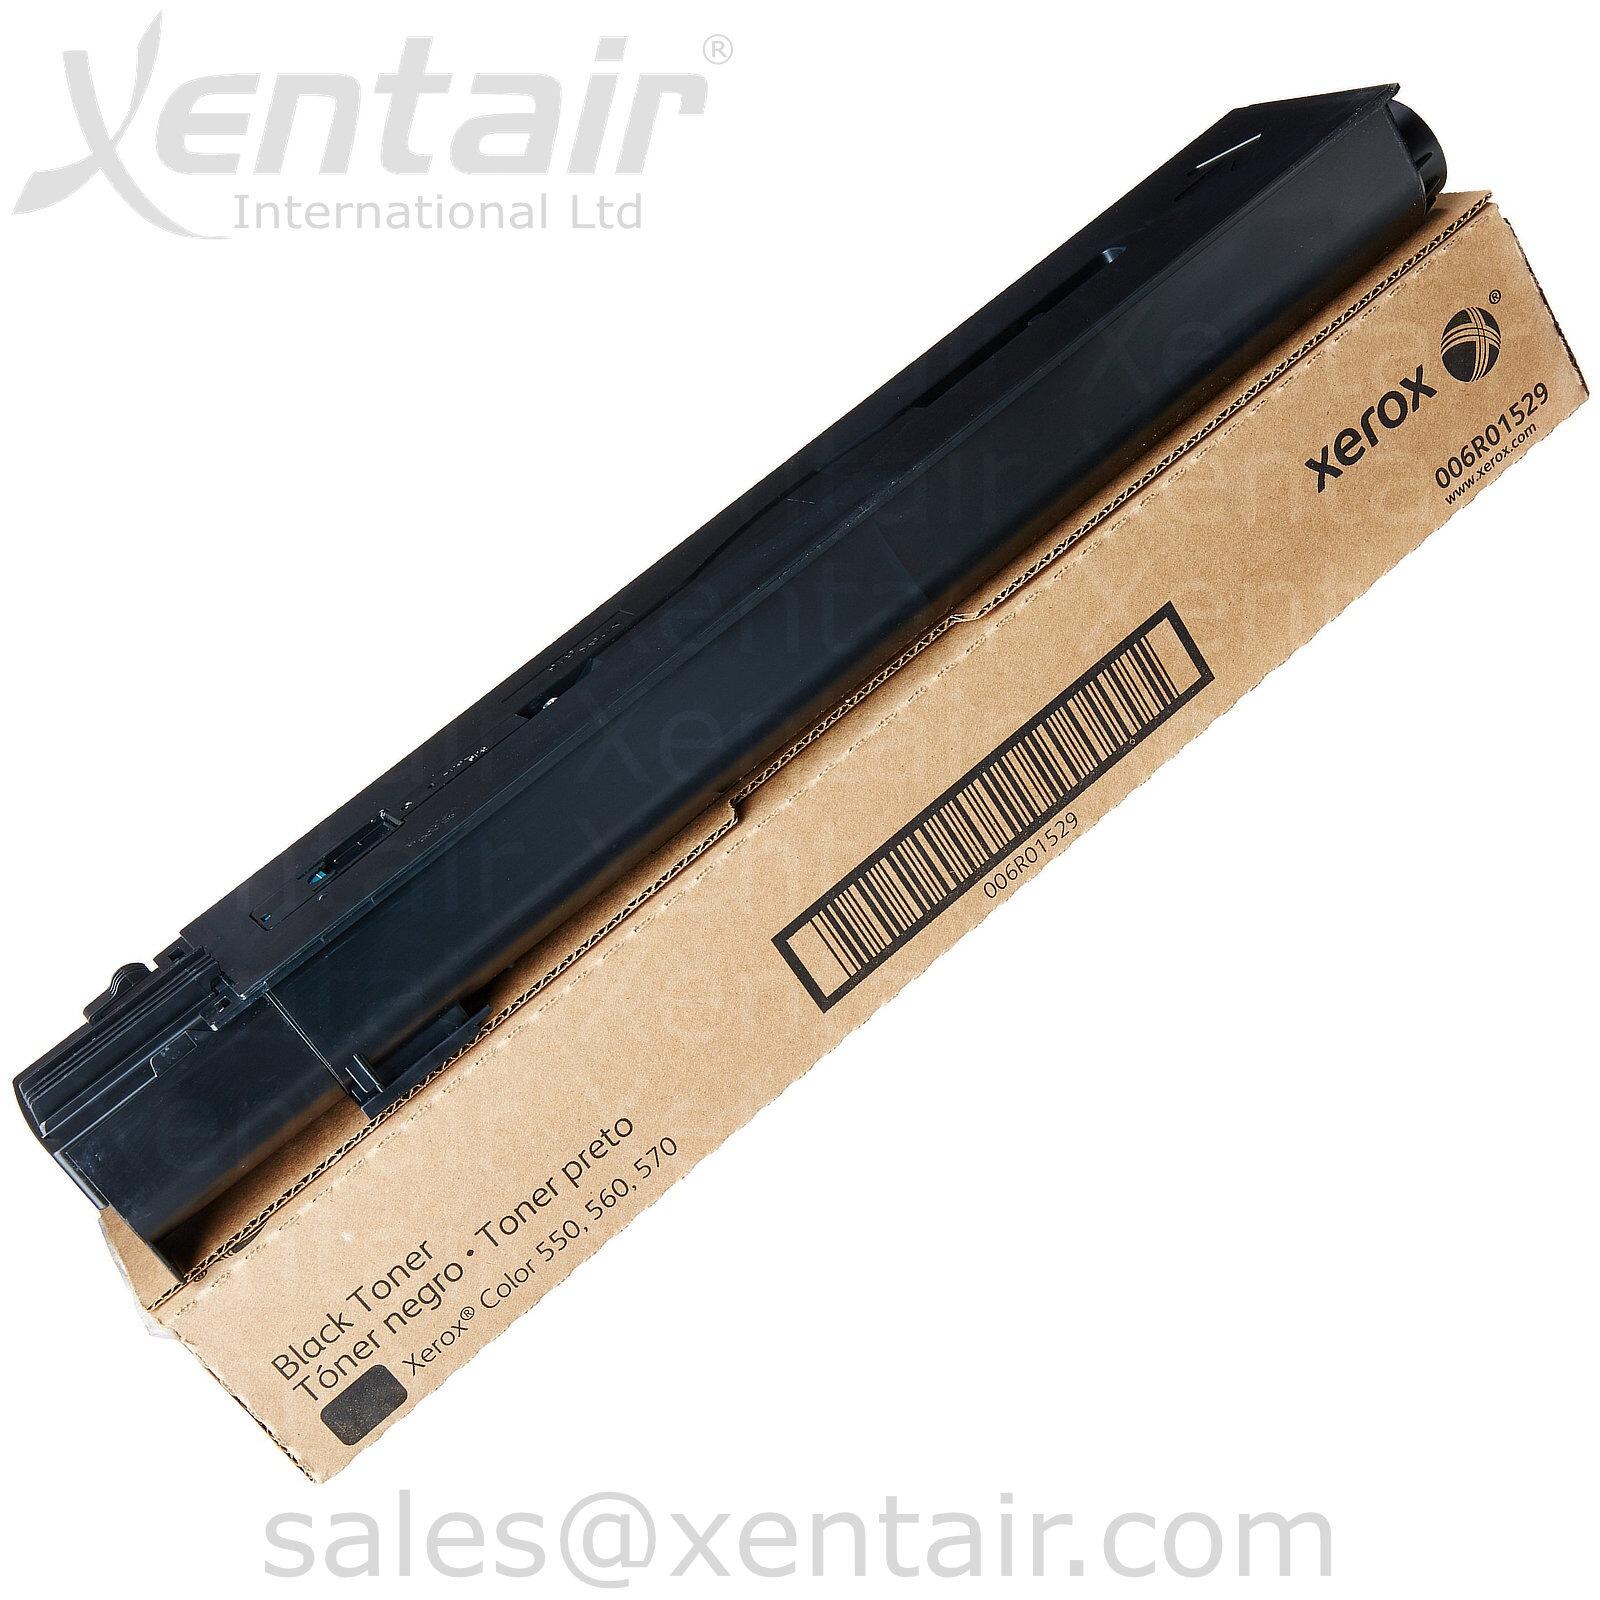 Xerox® Color 550 560 Black Toner Cartridge 006R01529 6R01529 6R1529